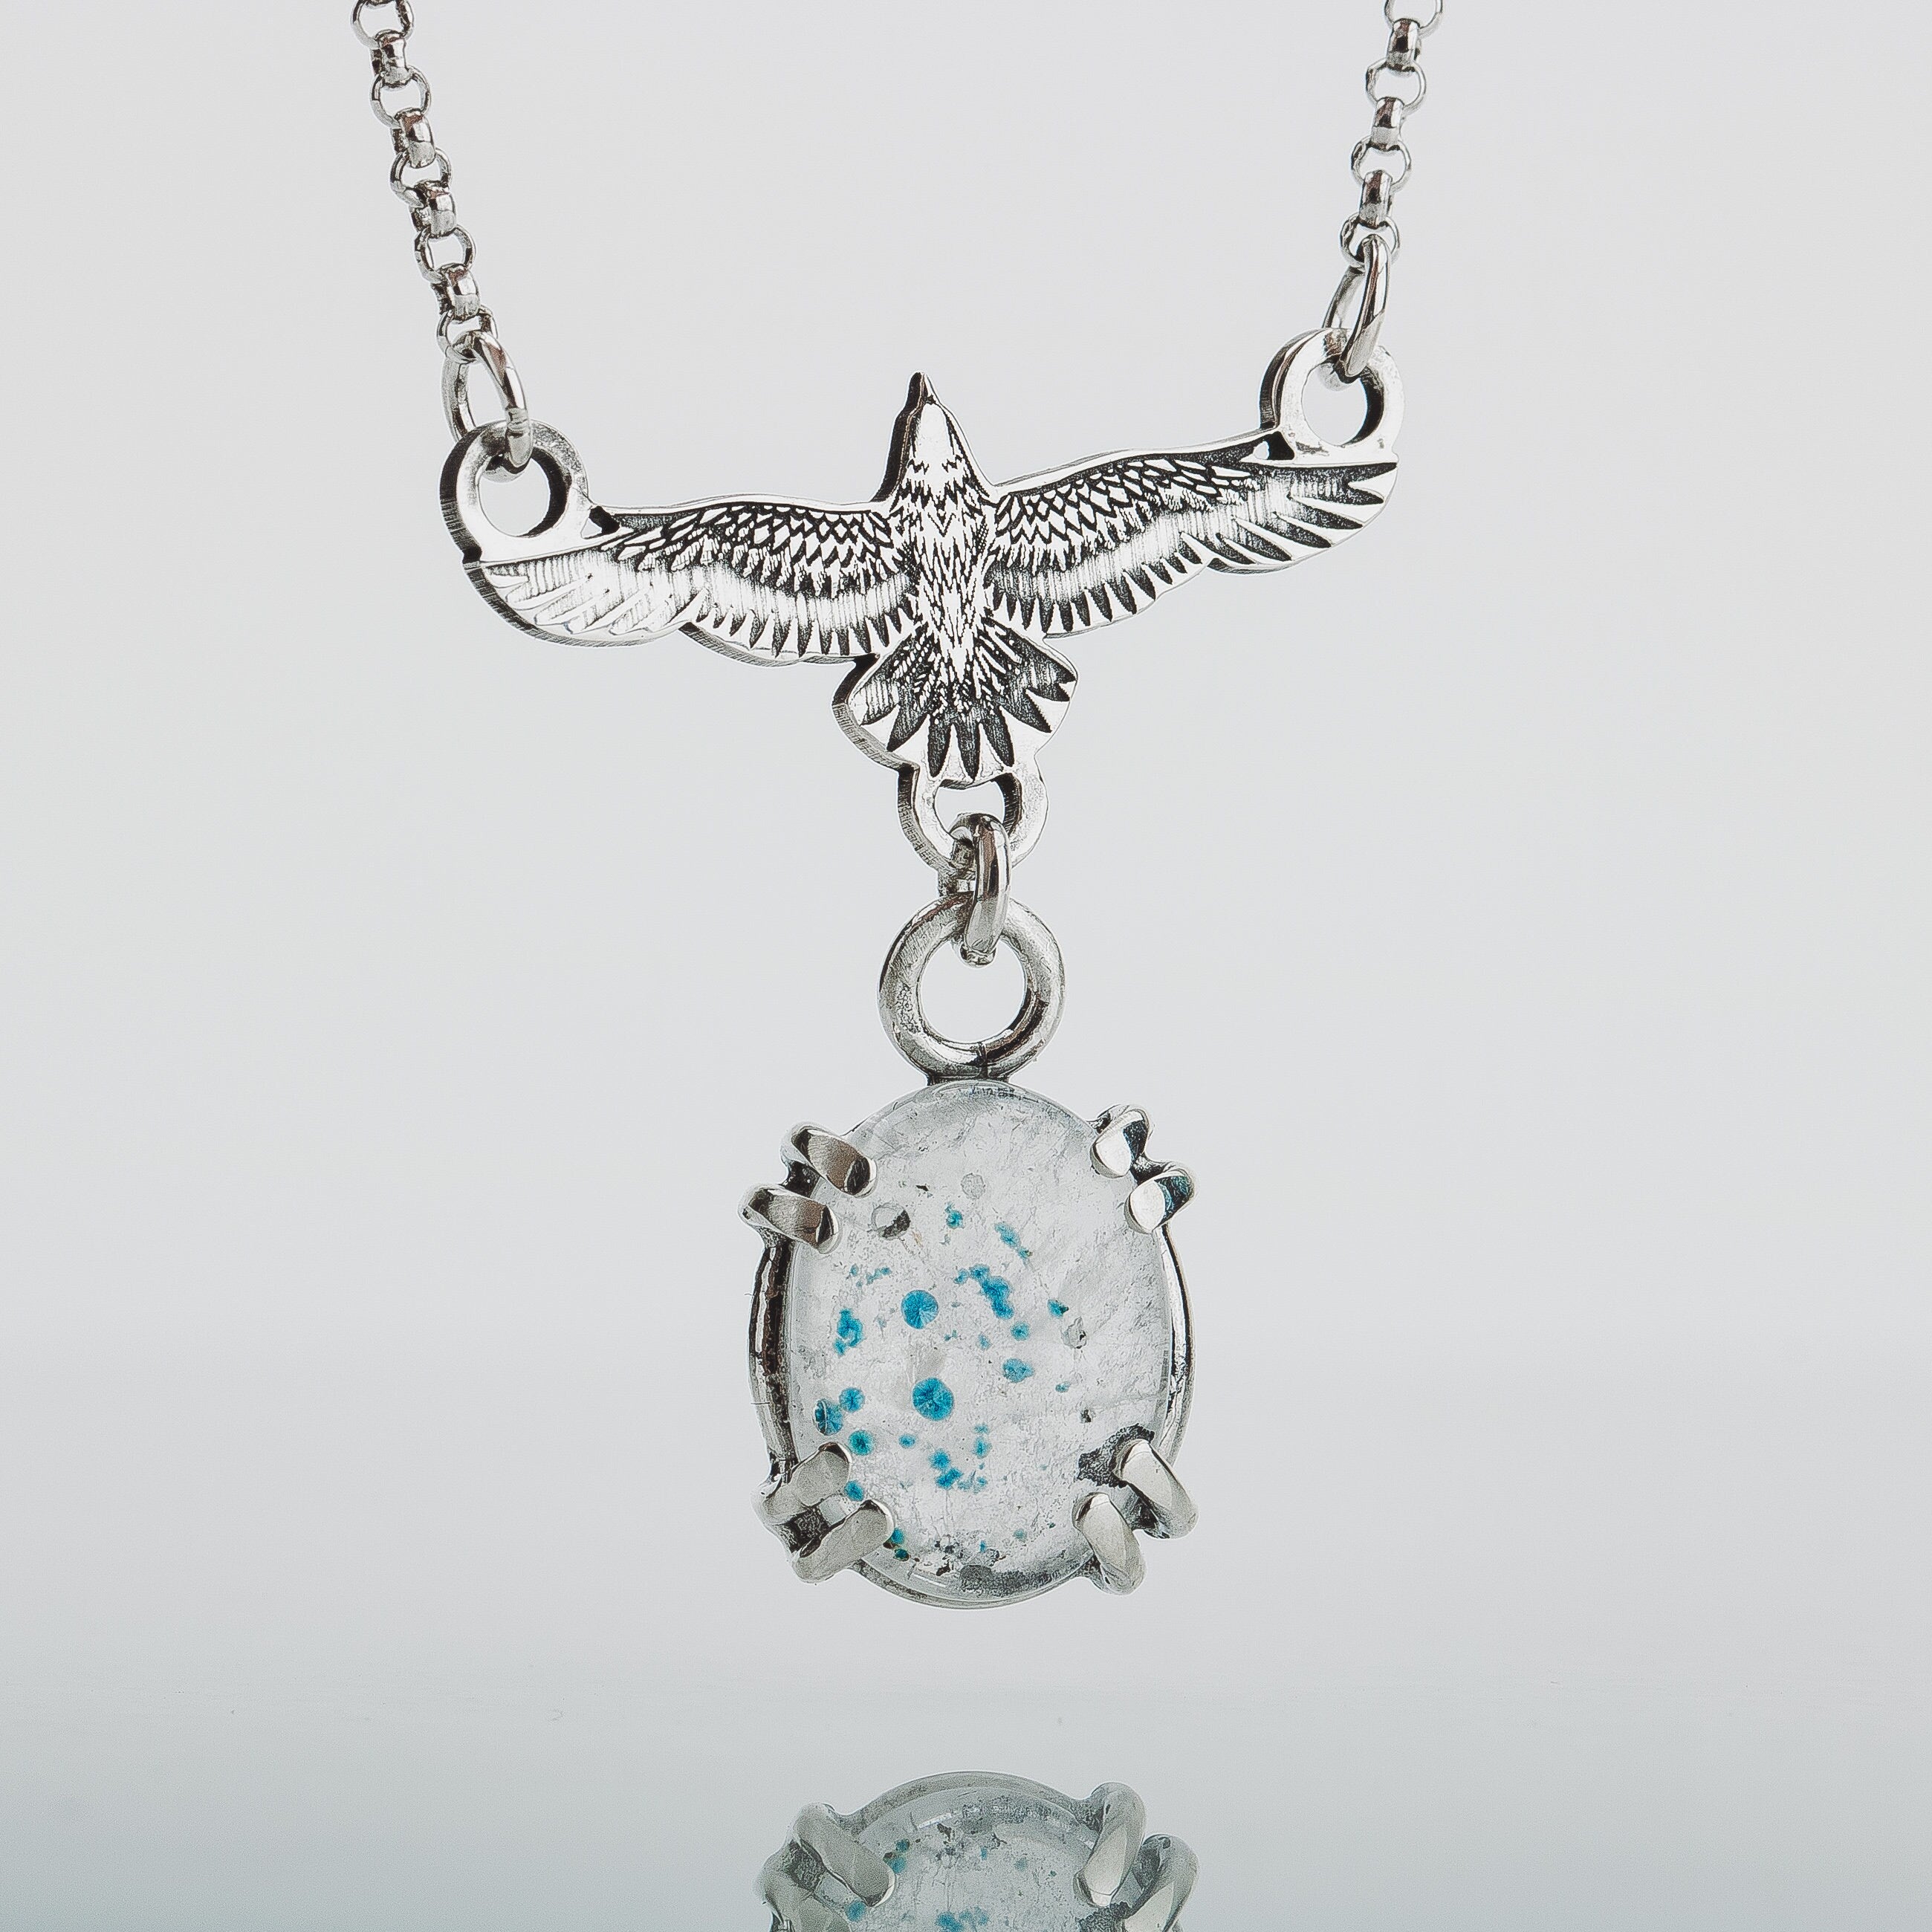 Raven Necklace with Medusa Quartz Gemstone - Melanie Golden Jewelry - fauna, gemstone necklaces, necklaces, raven, symbolic